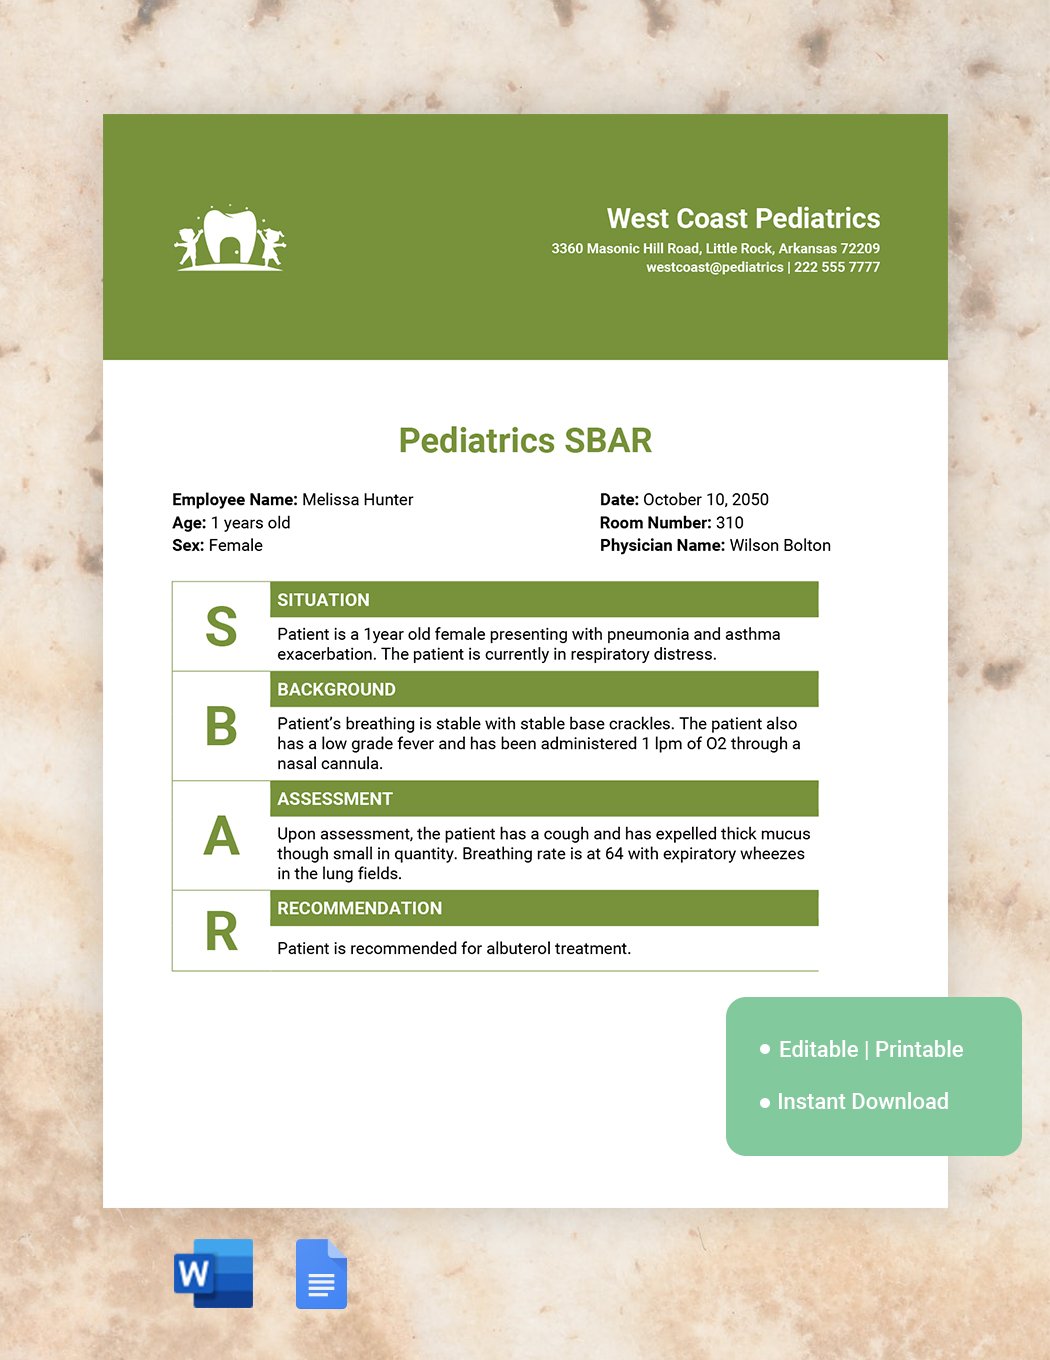 Pediatrics SBAR Template in Word, Google Docs